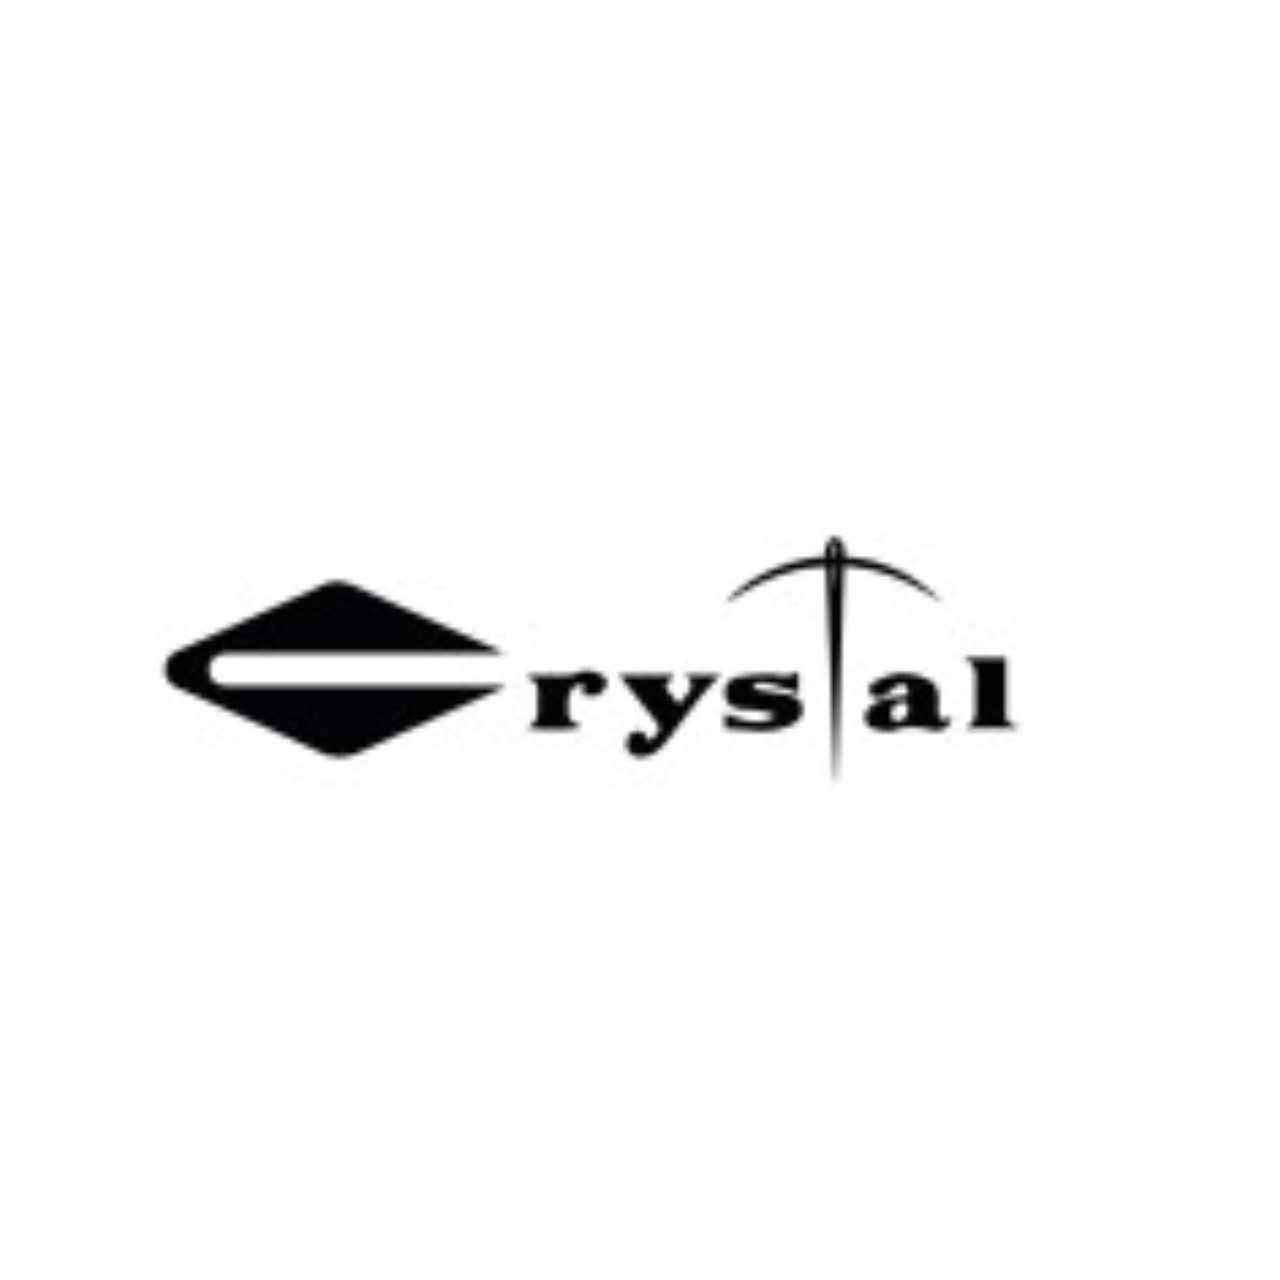 Logo crystal 2